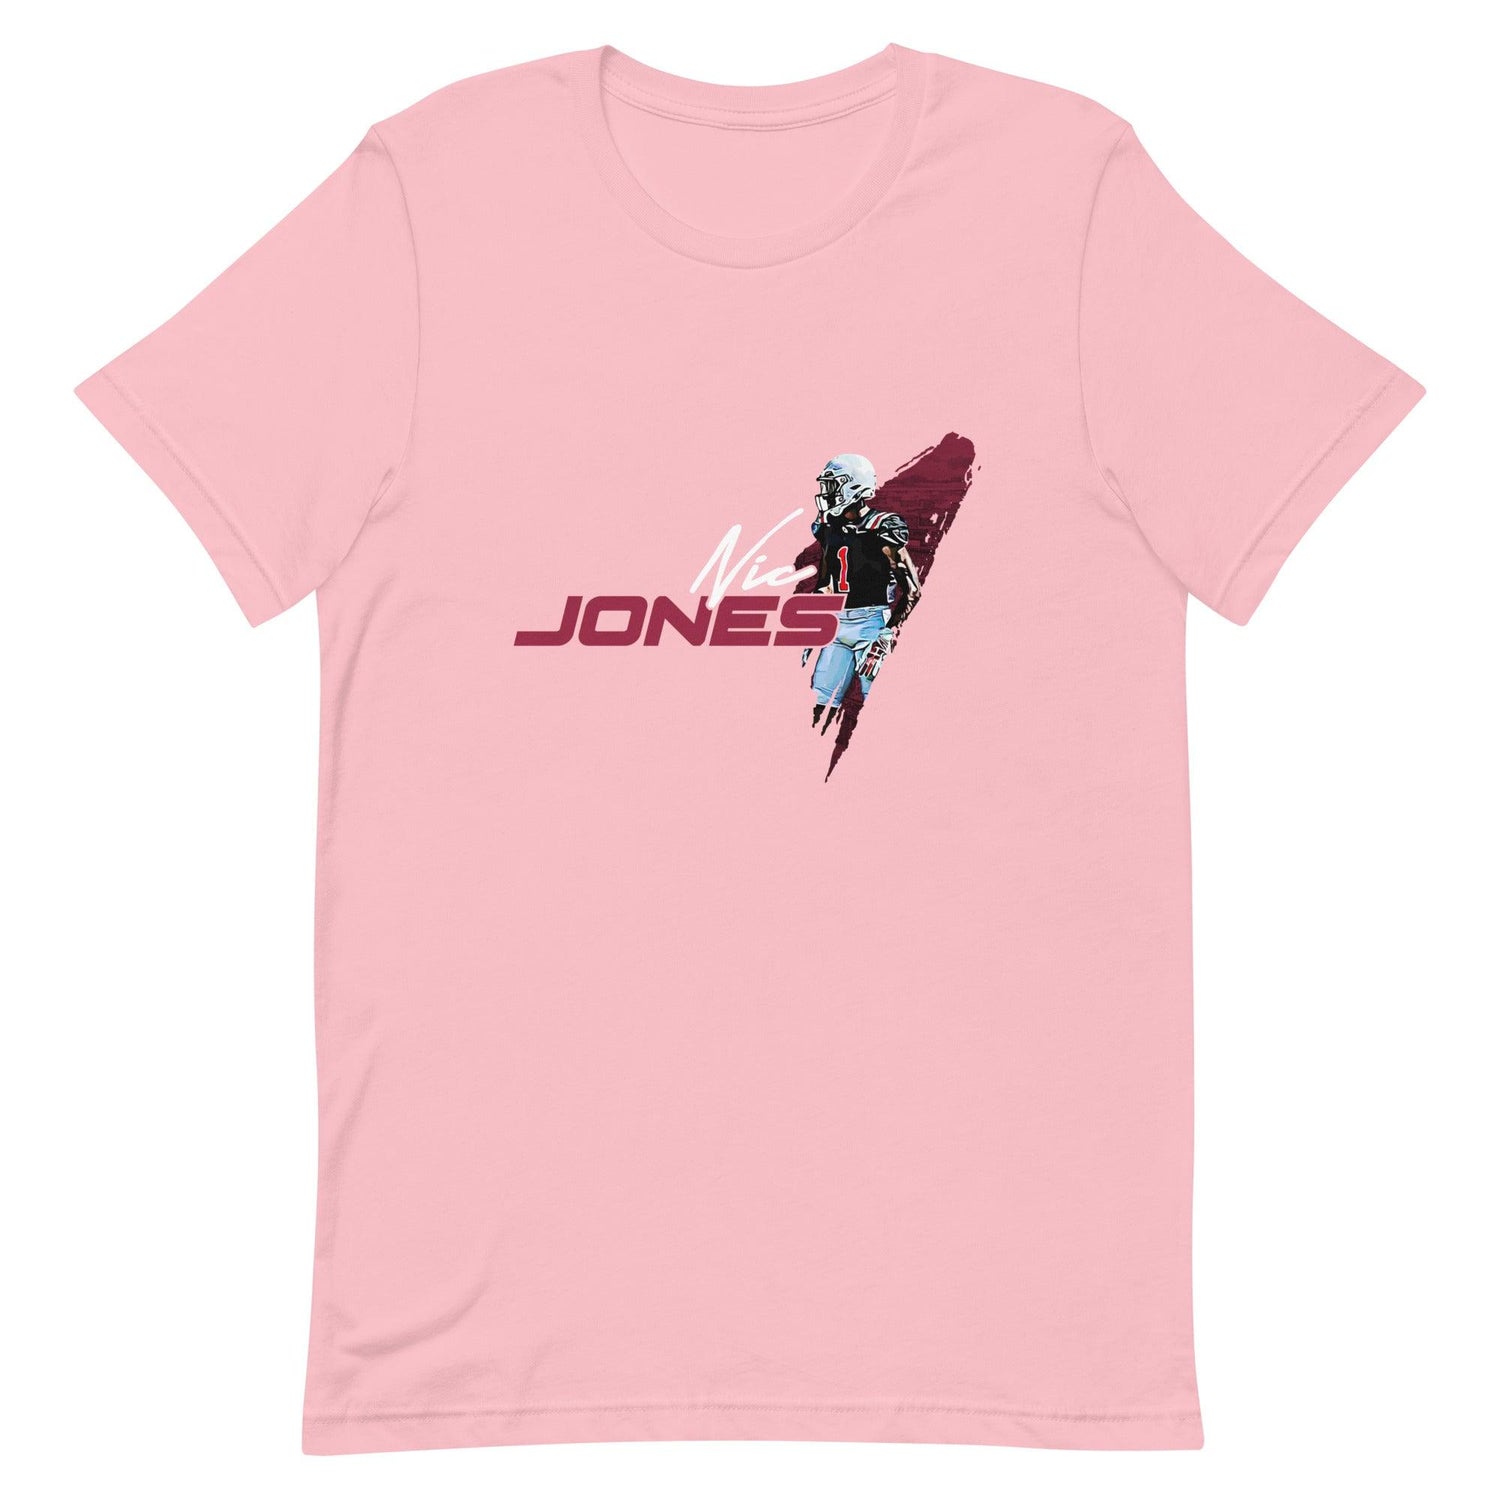 Nic Jones "Essential" t-shirt - Fan Arch